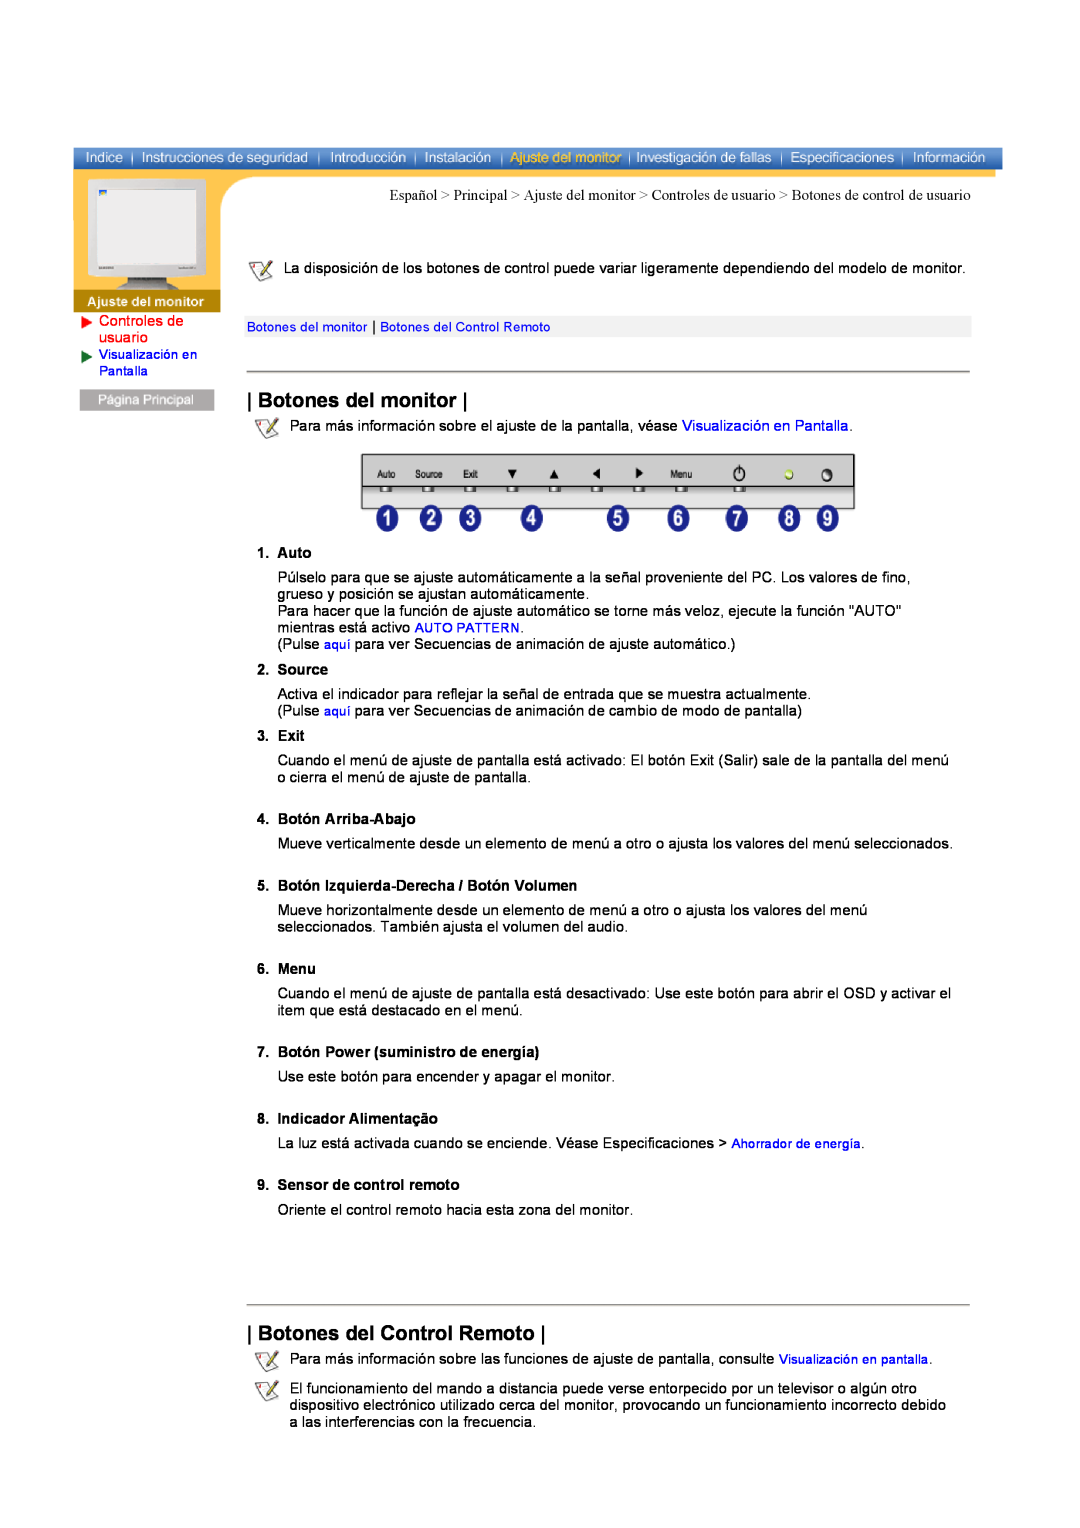 Samsung CK40BSNS/EDC manual Botones del monitor, Botones del Control Remoto, Controles de usuario, Auto, Source, Exit, Menu 